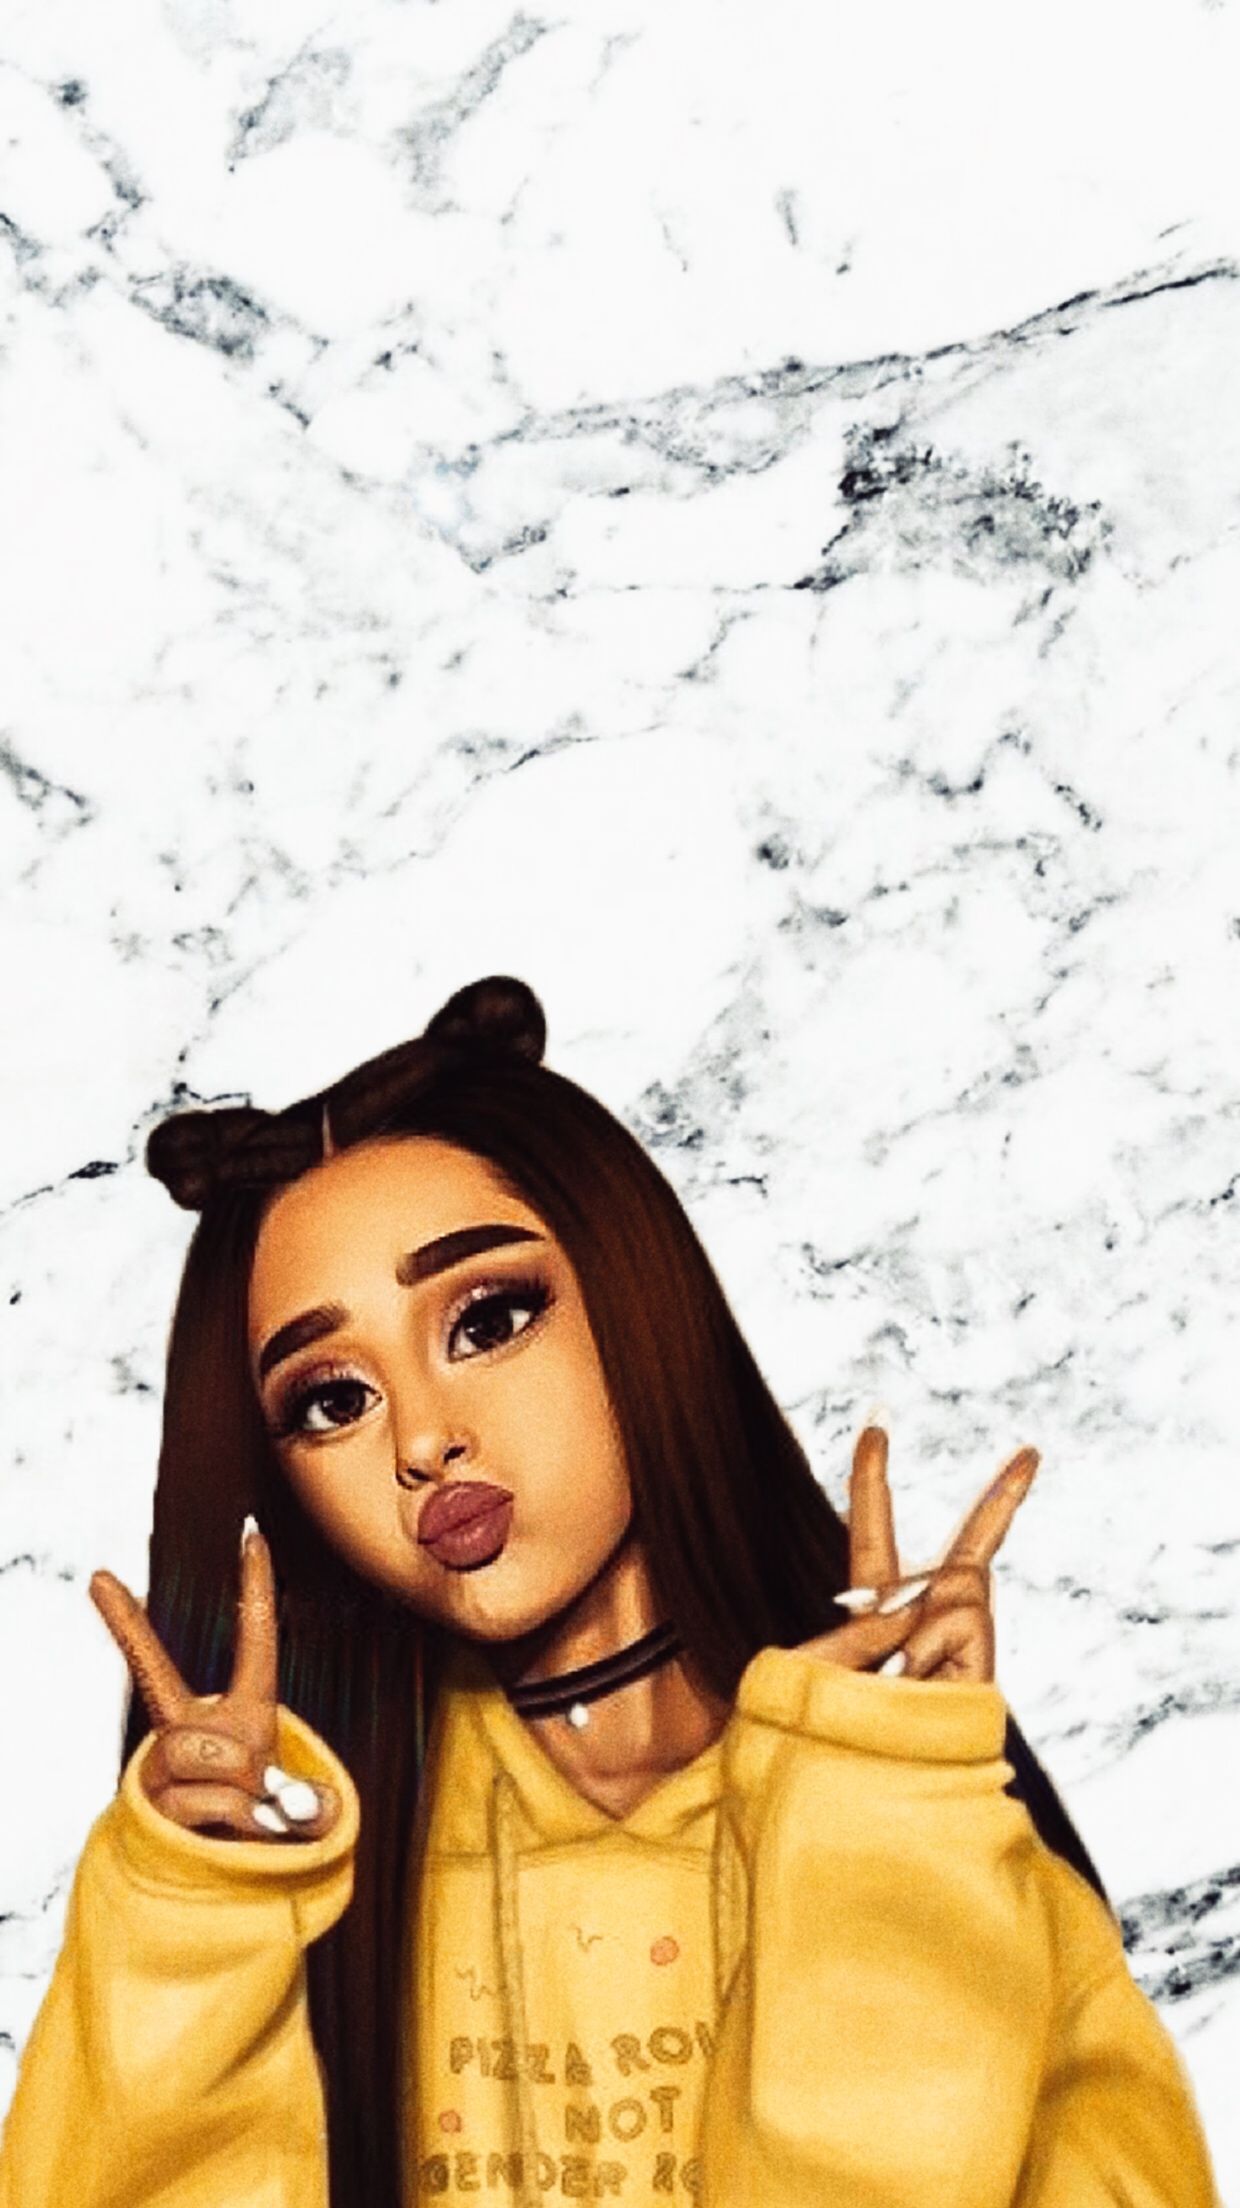 Cute Wallpaper Iphone Cute Wallpaper Cute Ariana Grande